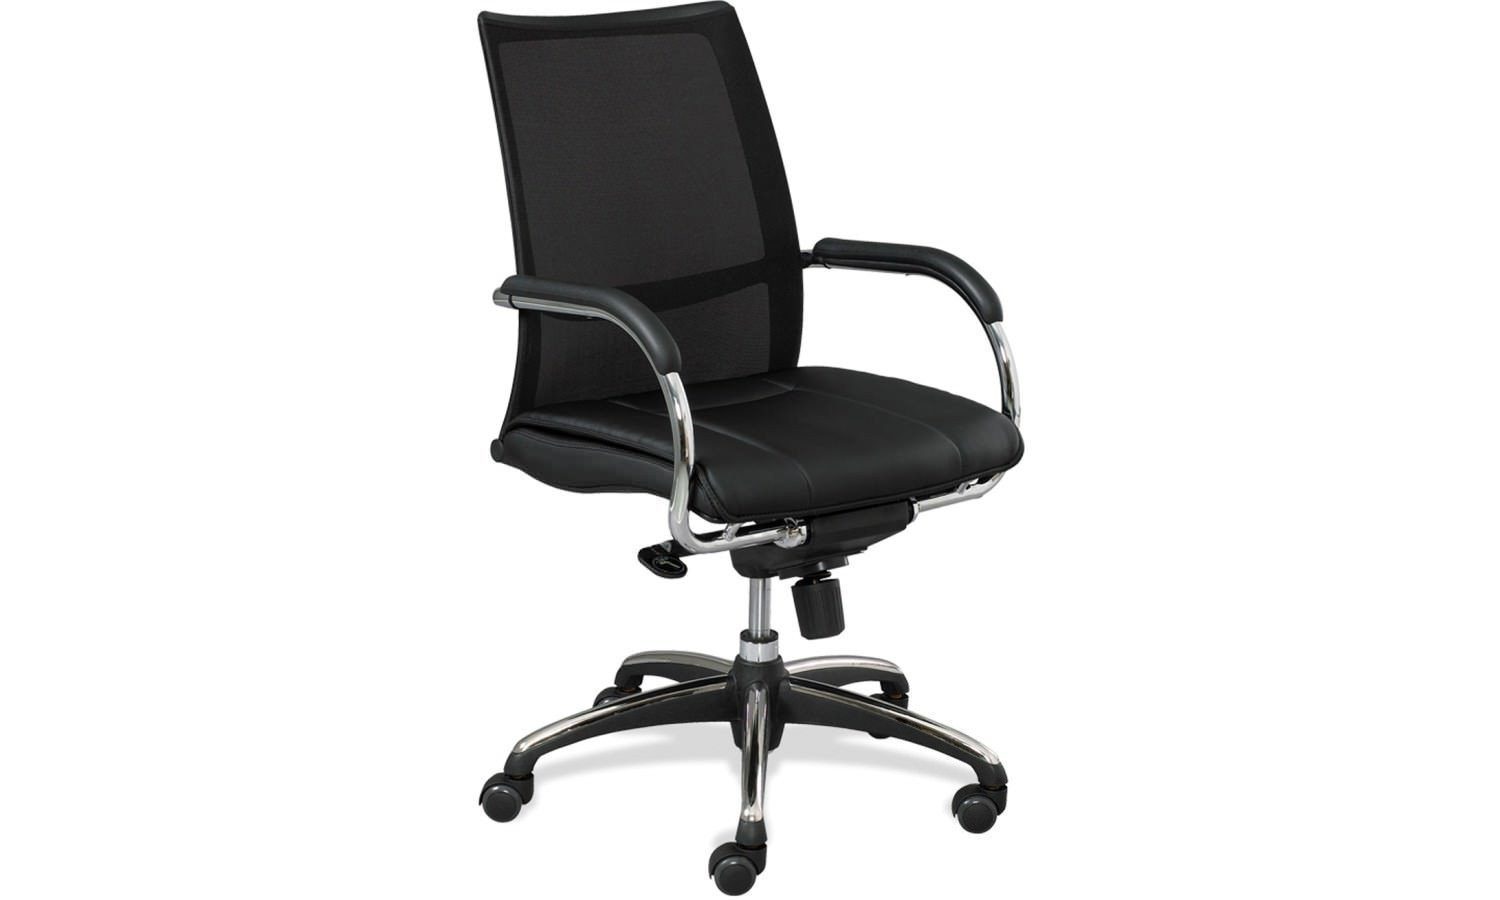 Kookaburra Office Chair - Medium Black Mesh Back Jasonl black 